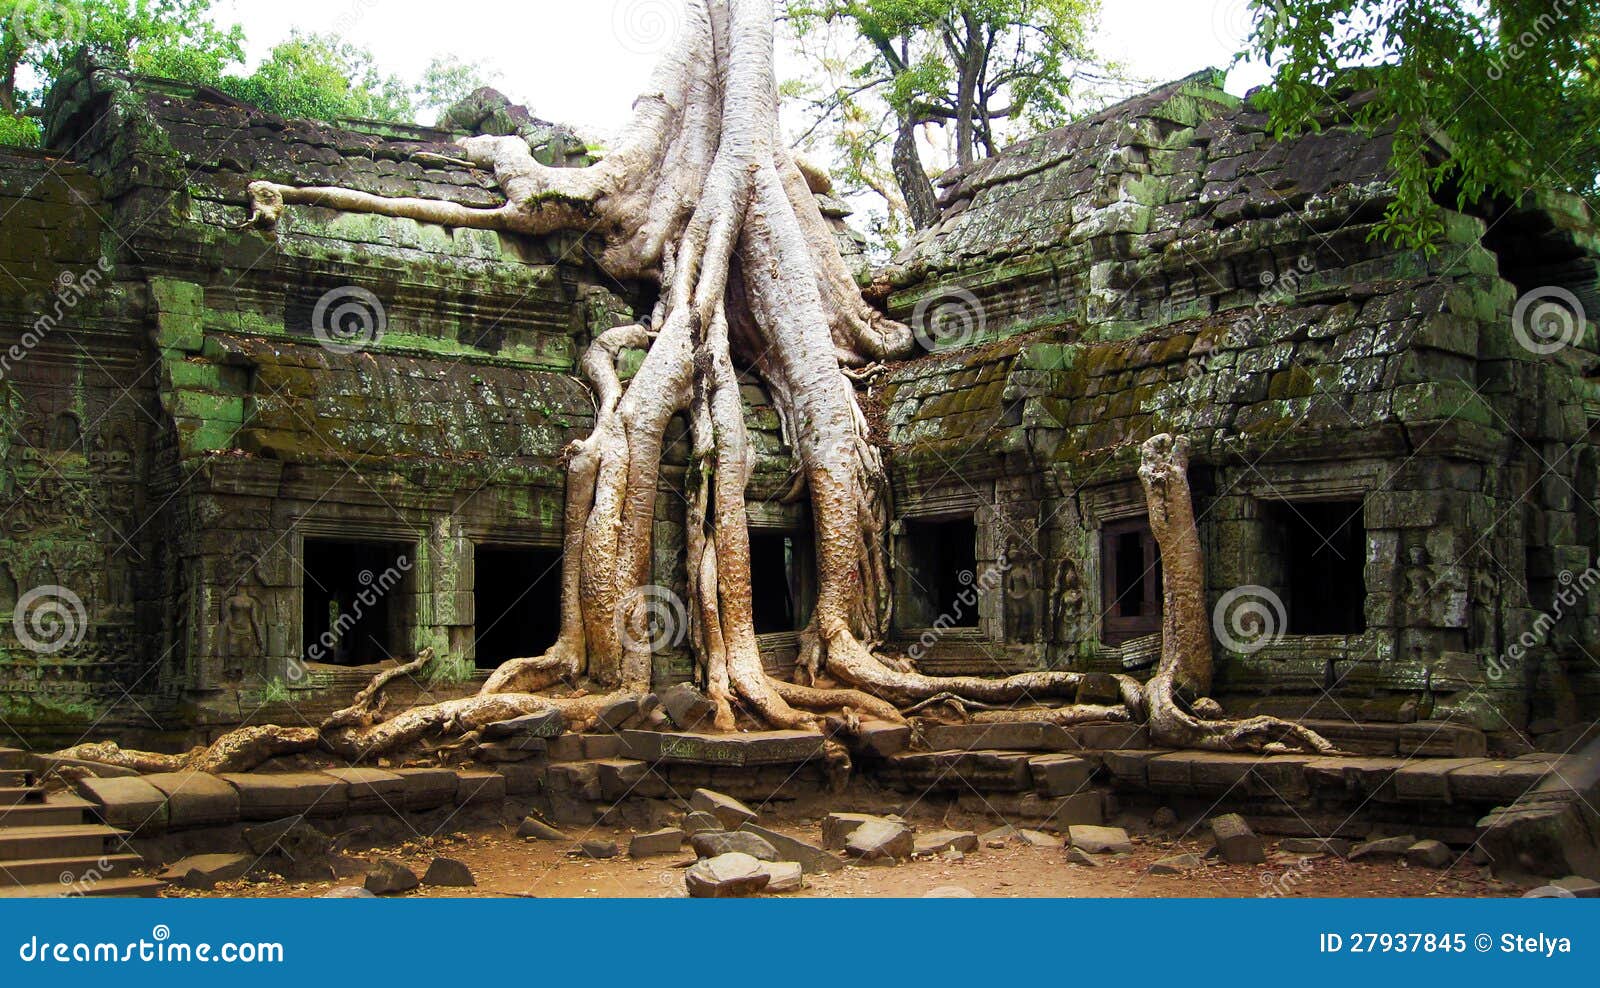 ta prohm temple siem reap cambodia- ancient angkor